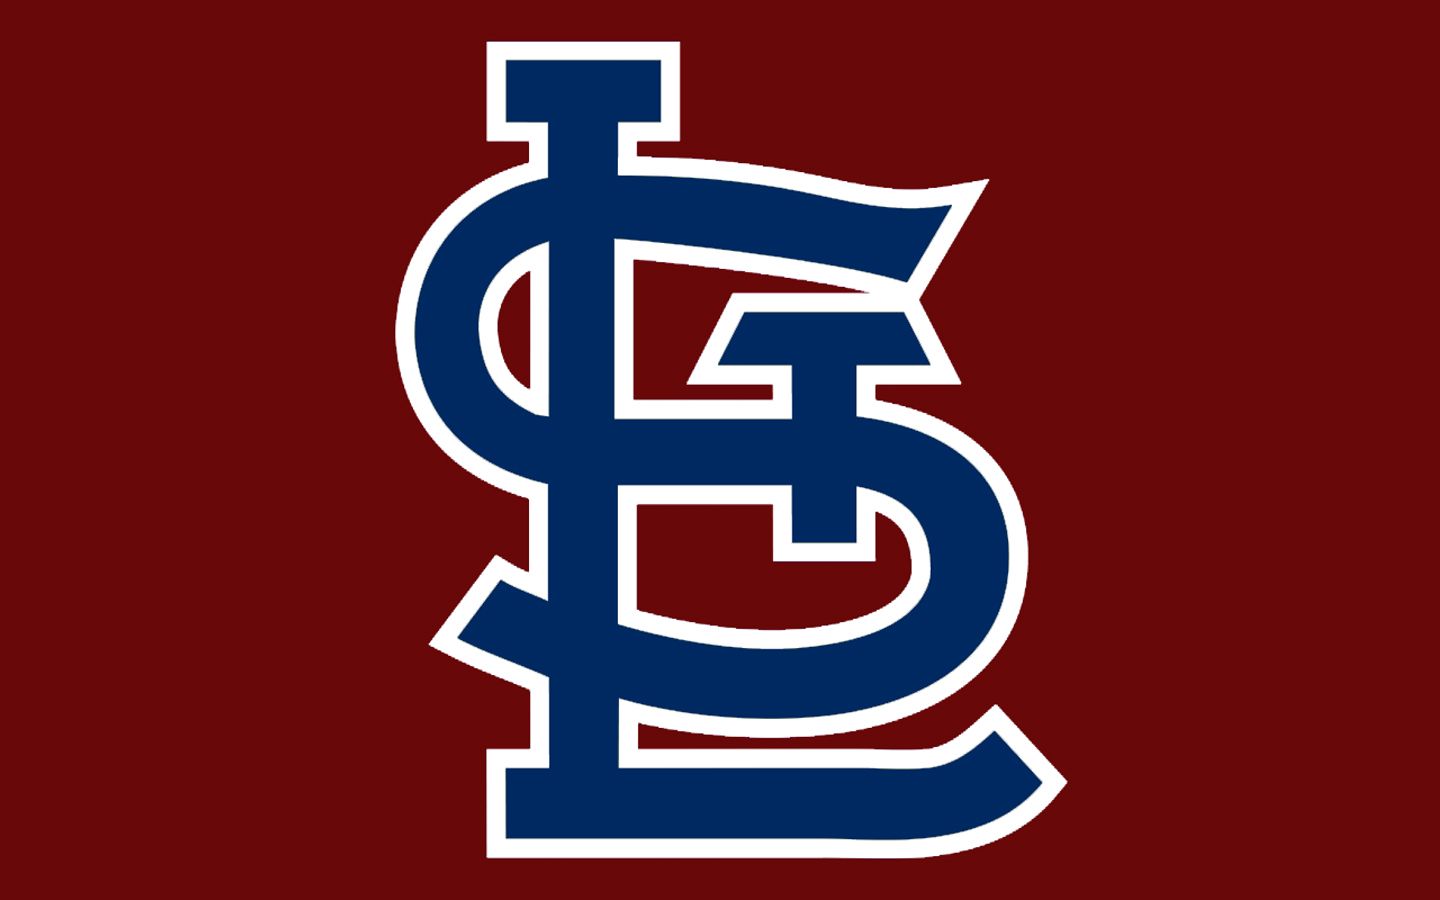 St Louis Cardinals Logo - ClipArt Best